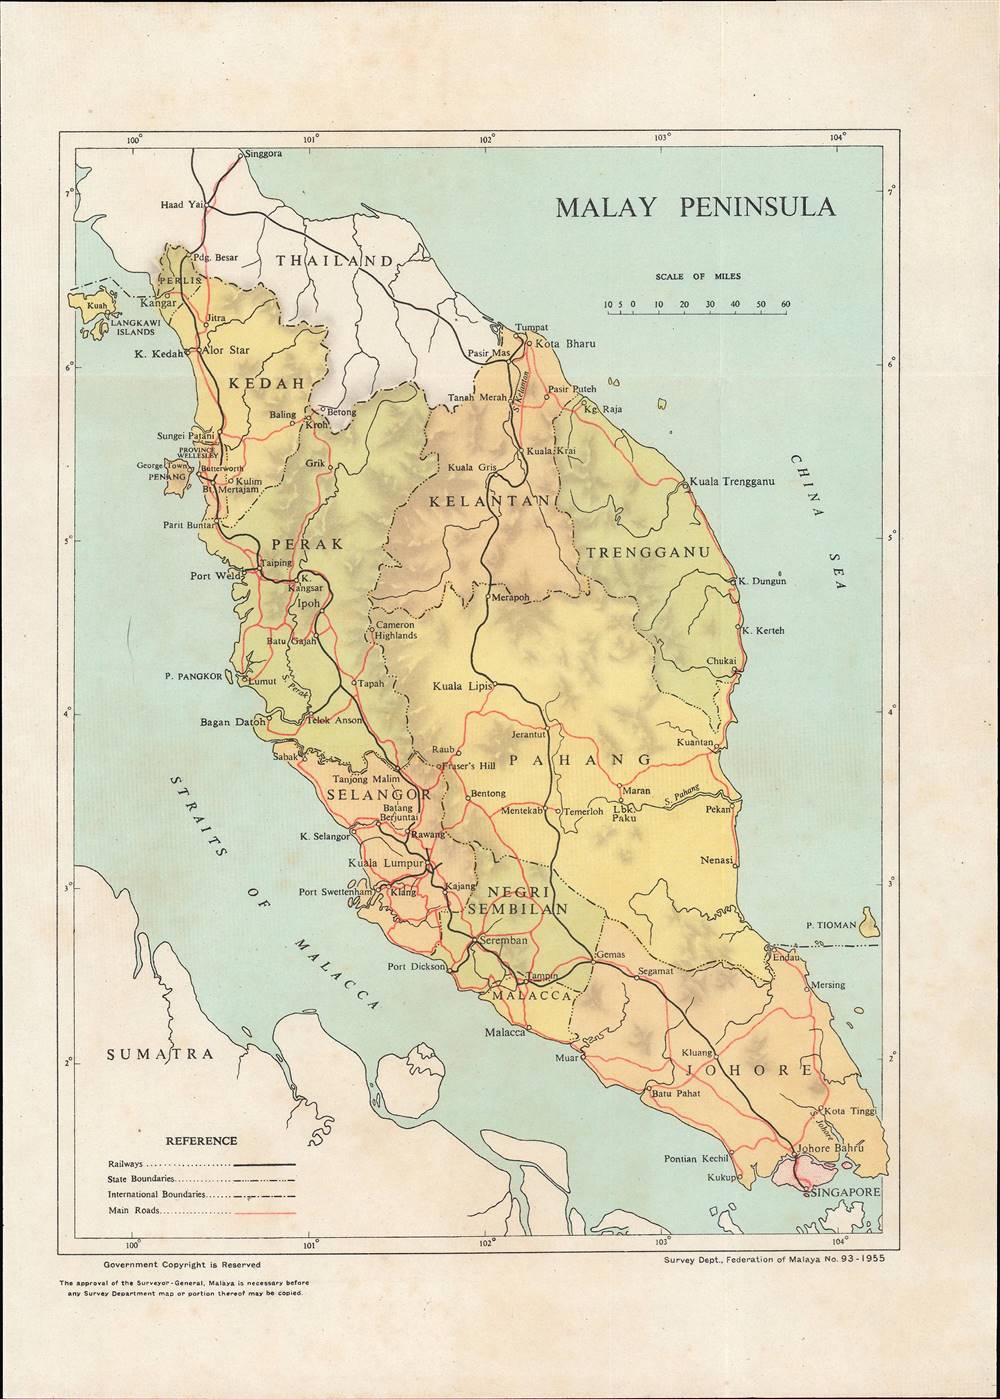 1955 Survey Department Map of Malay Peninsula, Malaysia, Singapore